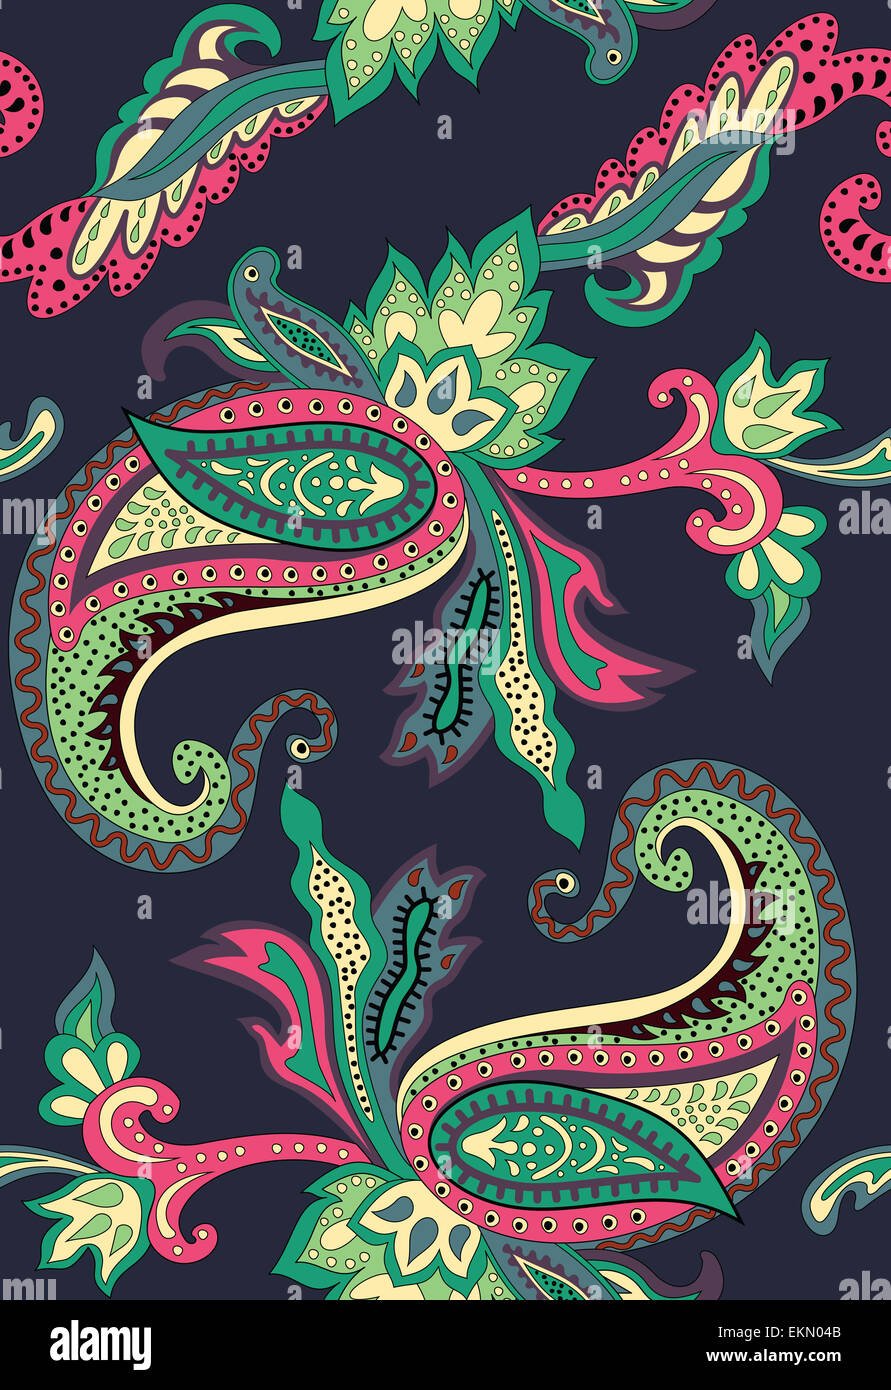 Paisley pattern on black background Stock Photo